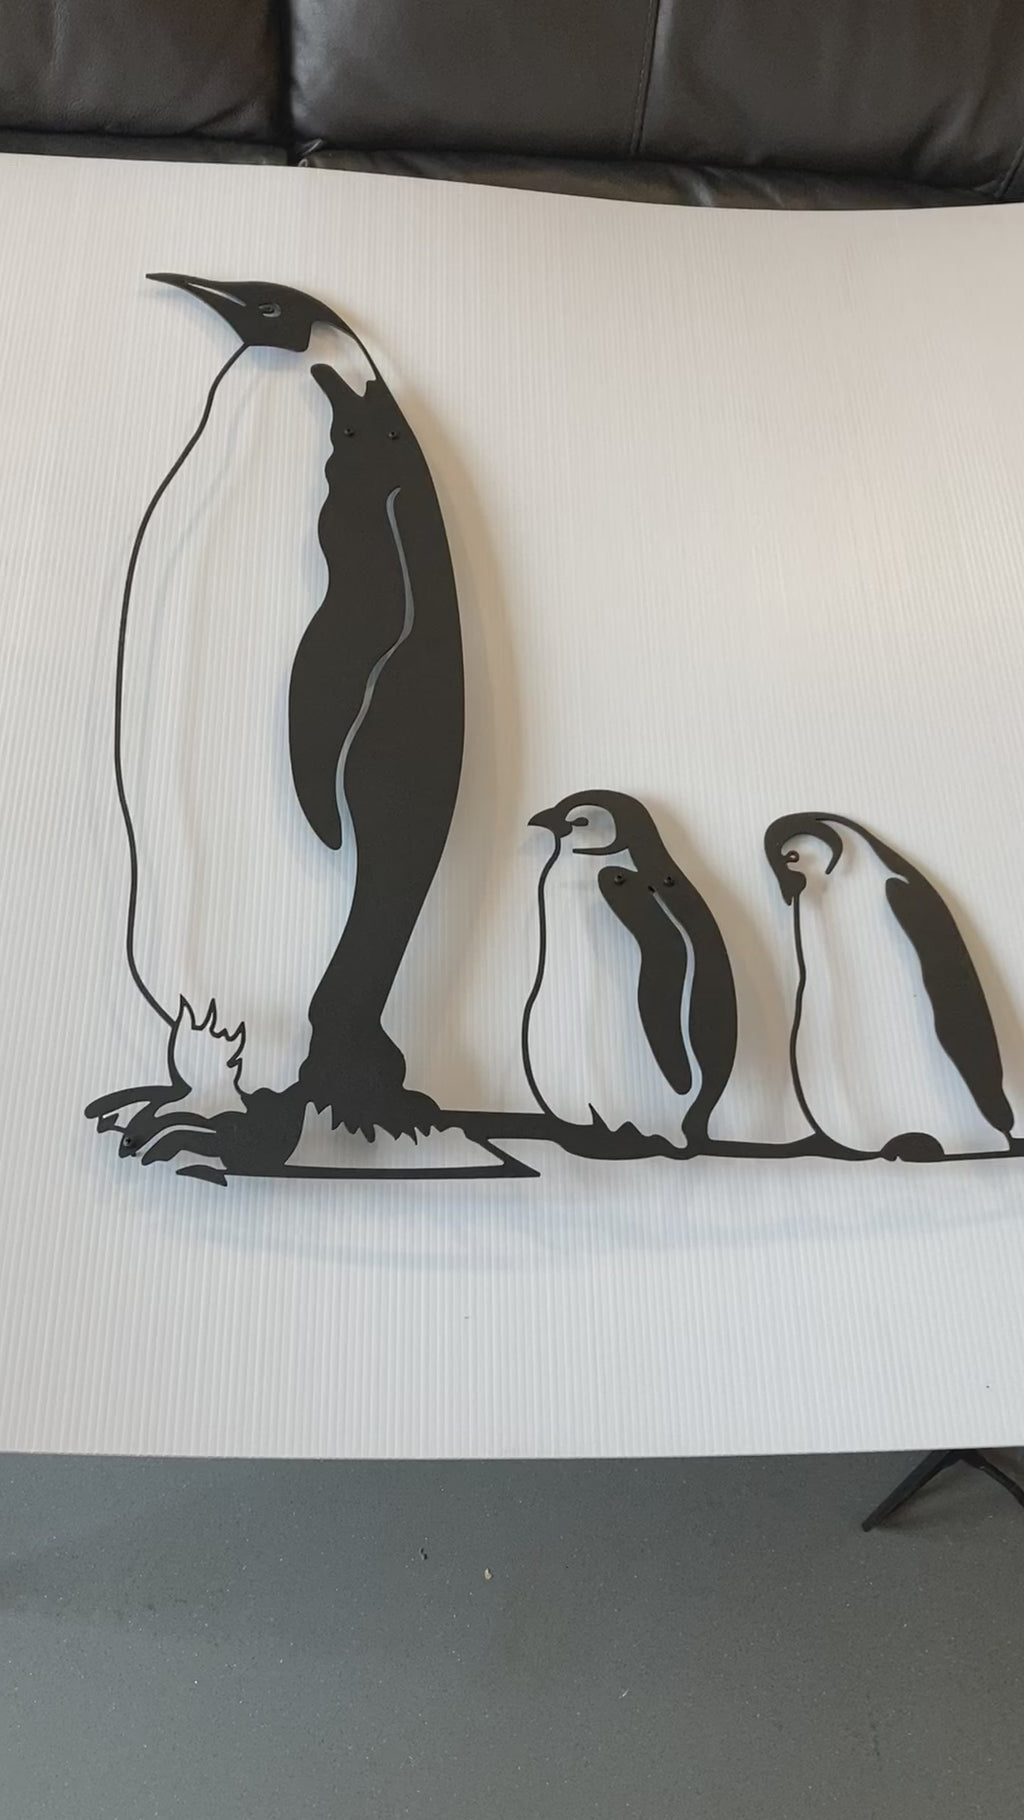 Penguin Family - Metal Wall Art